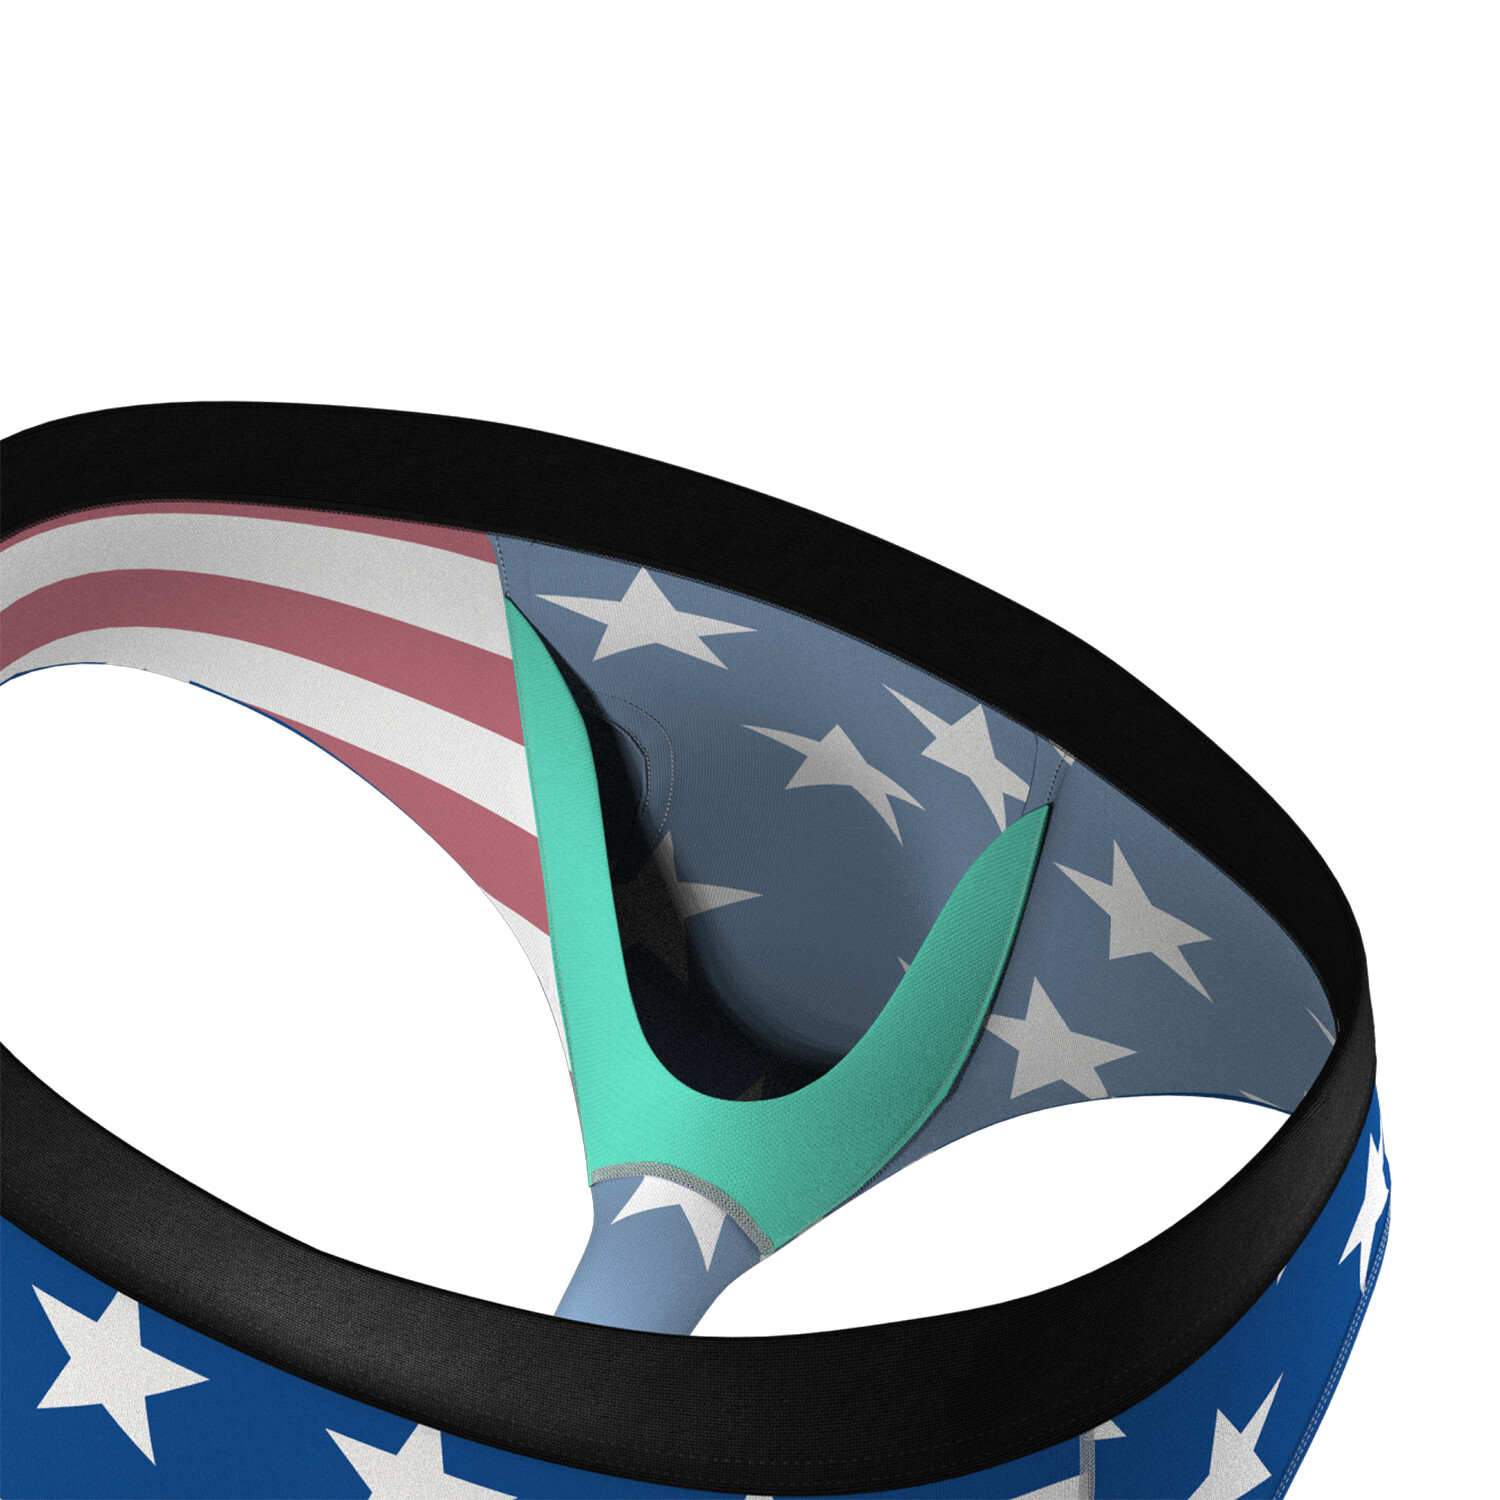 The Mascot // American Flag Ball Hammock® Pouch Underwear Briefs